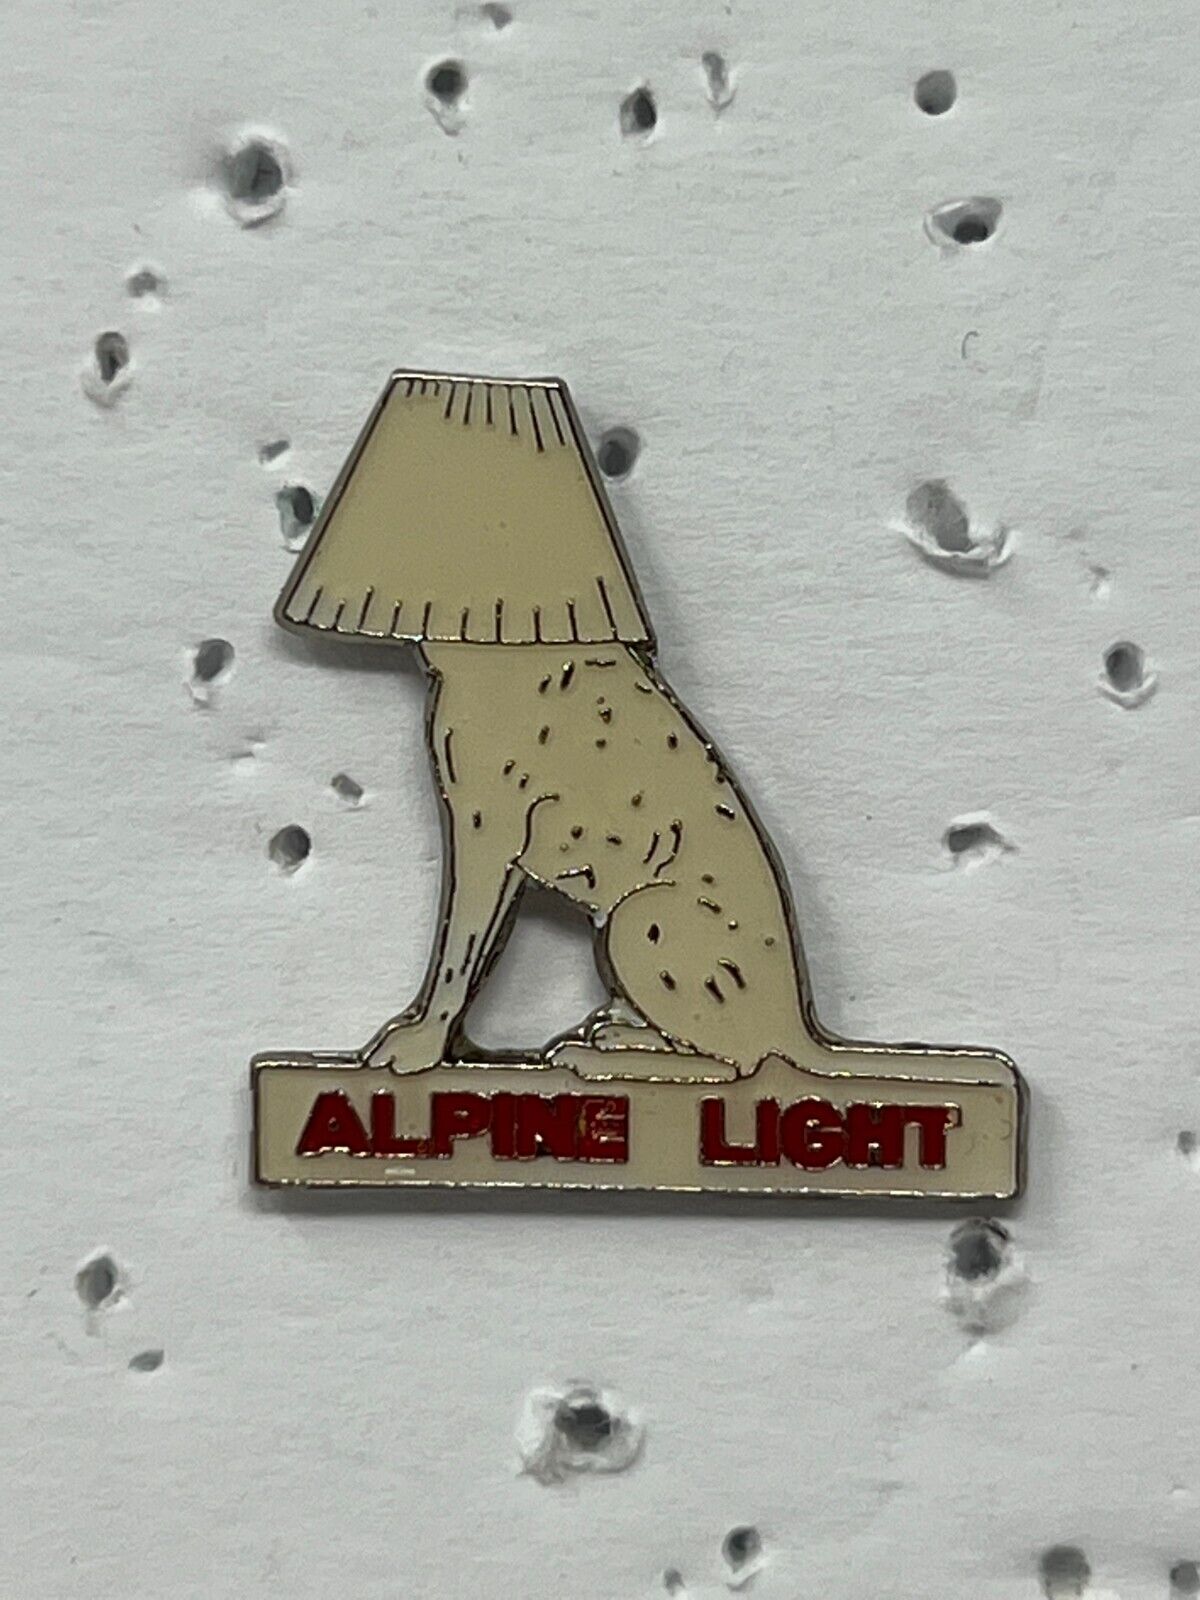 Alpine Light Beer & Liquor Lapel Pin